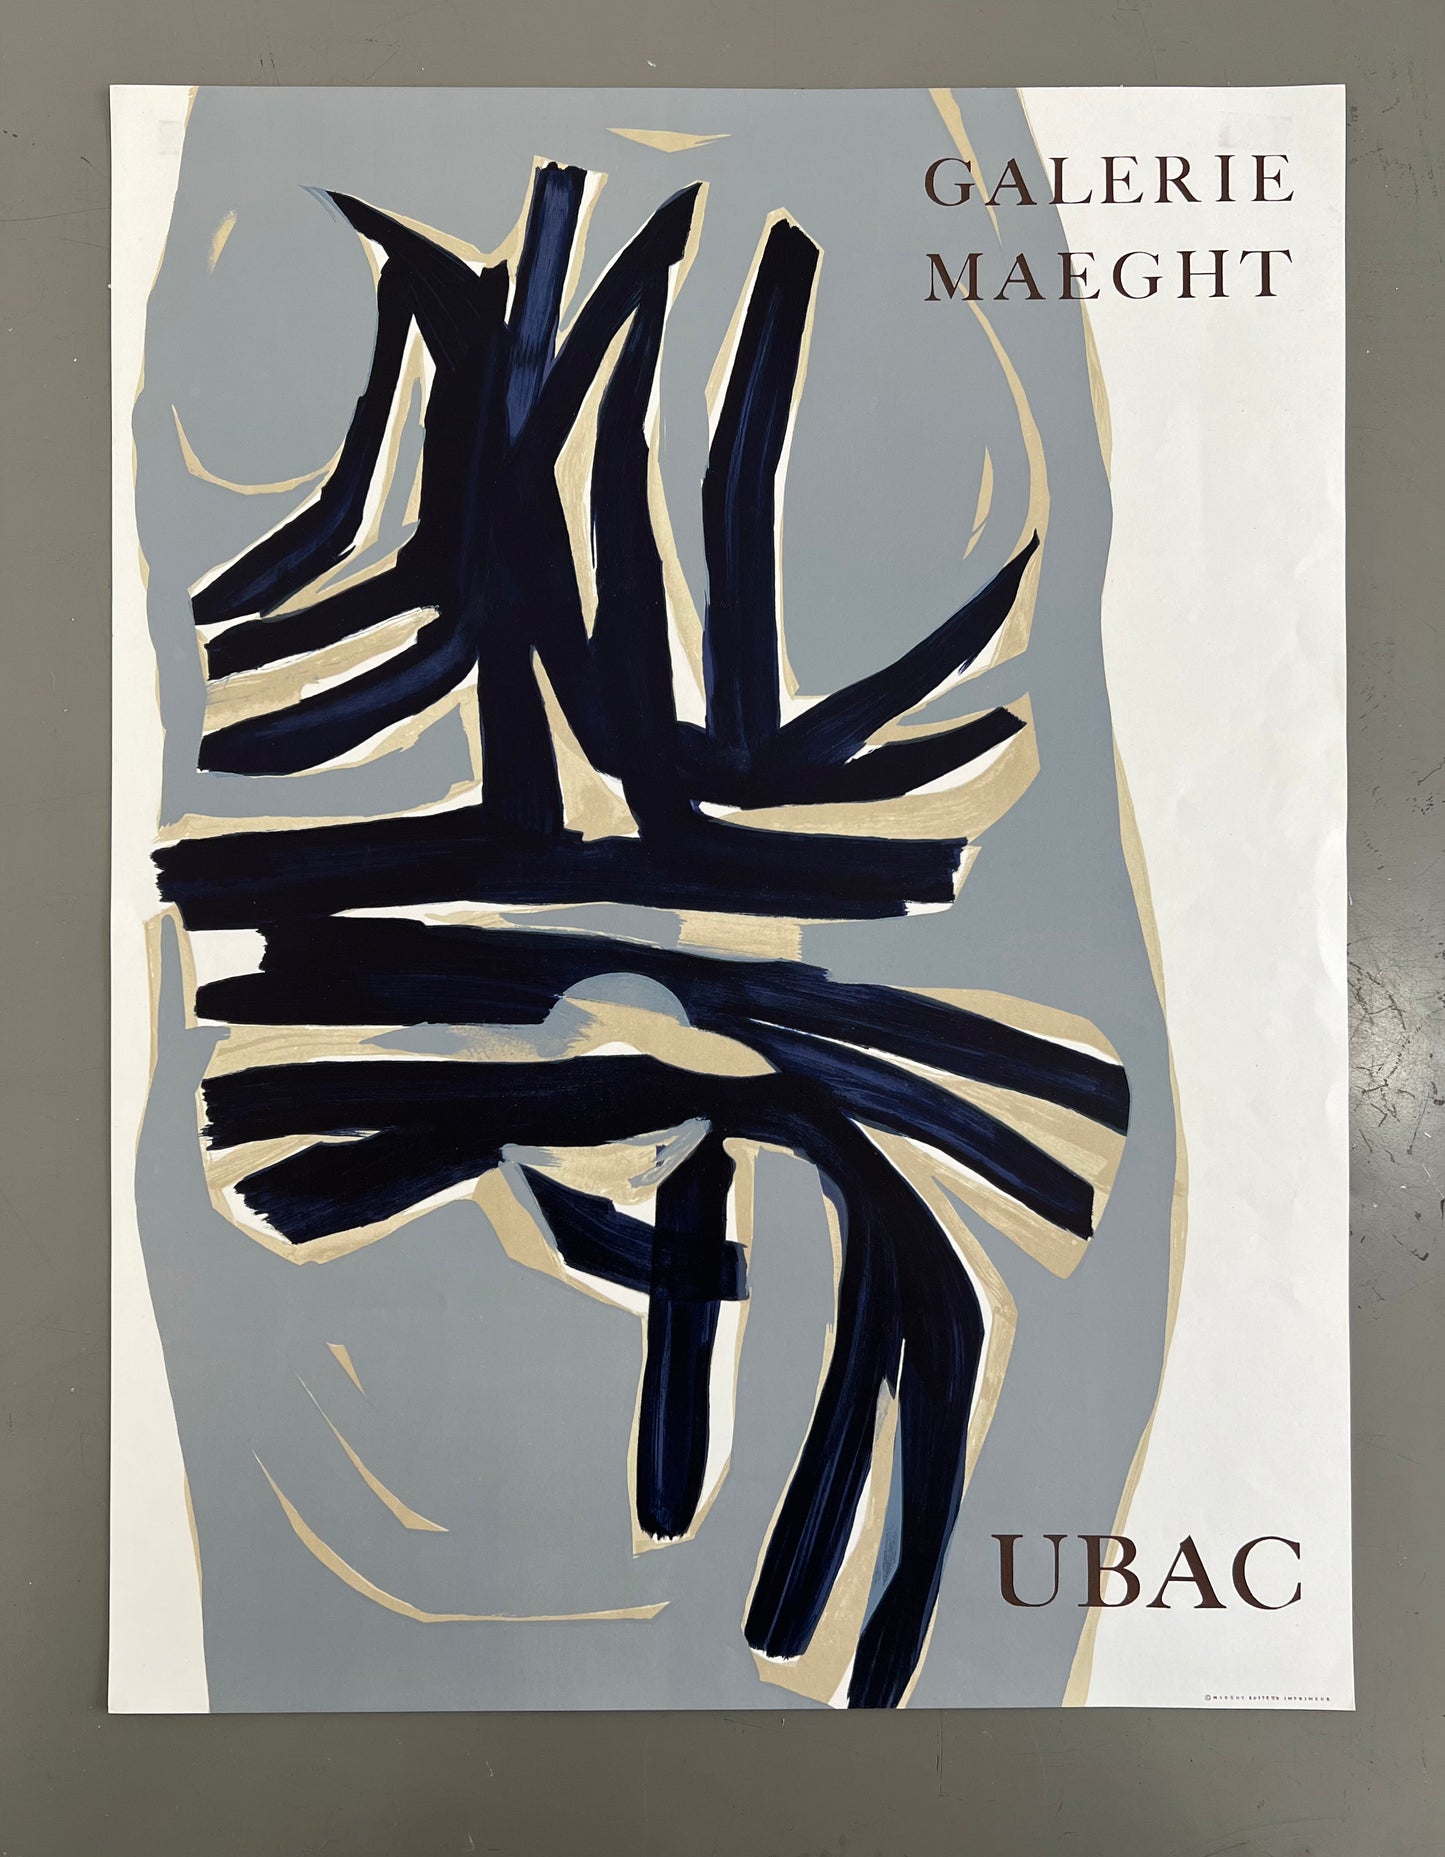 Raoul Ubac. "Gallery Maeght, Ubac", 1961